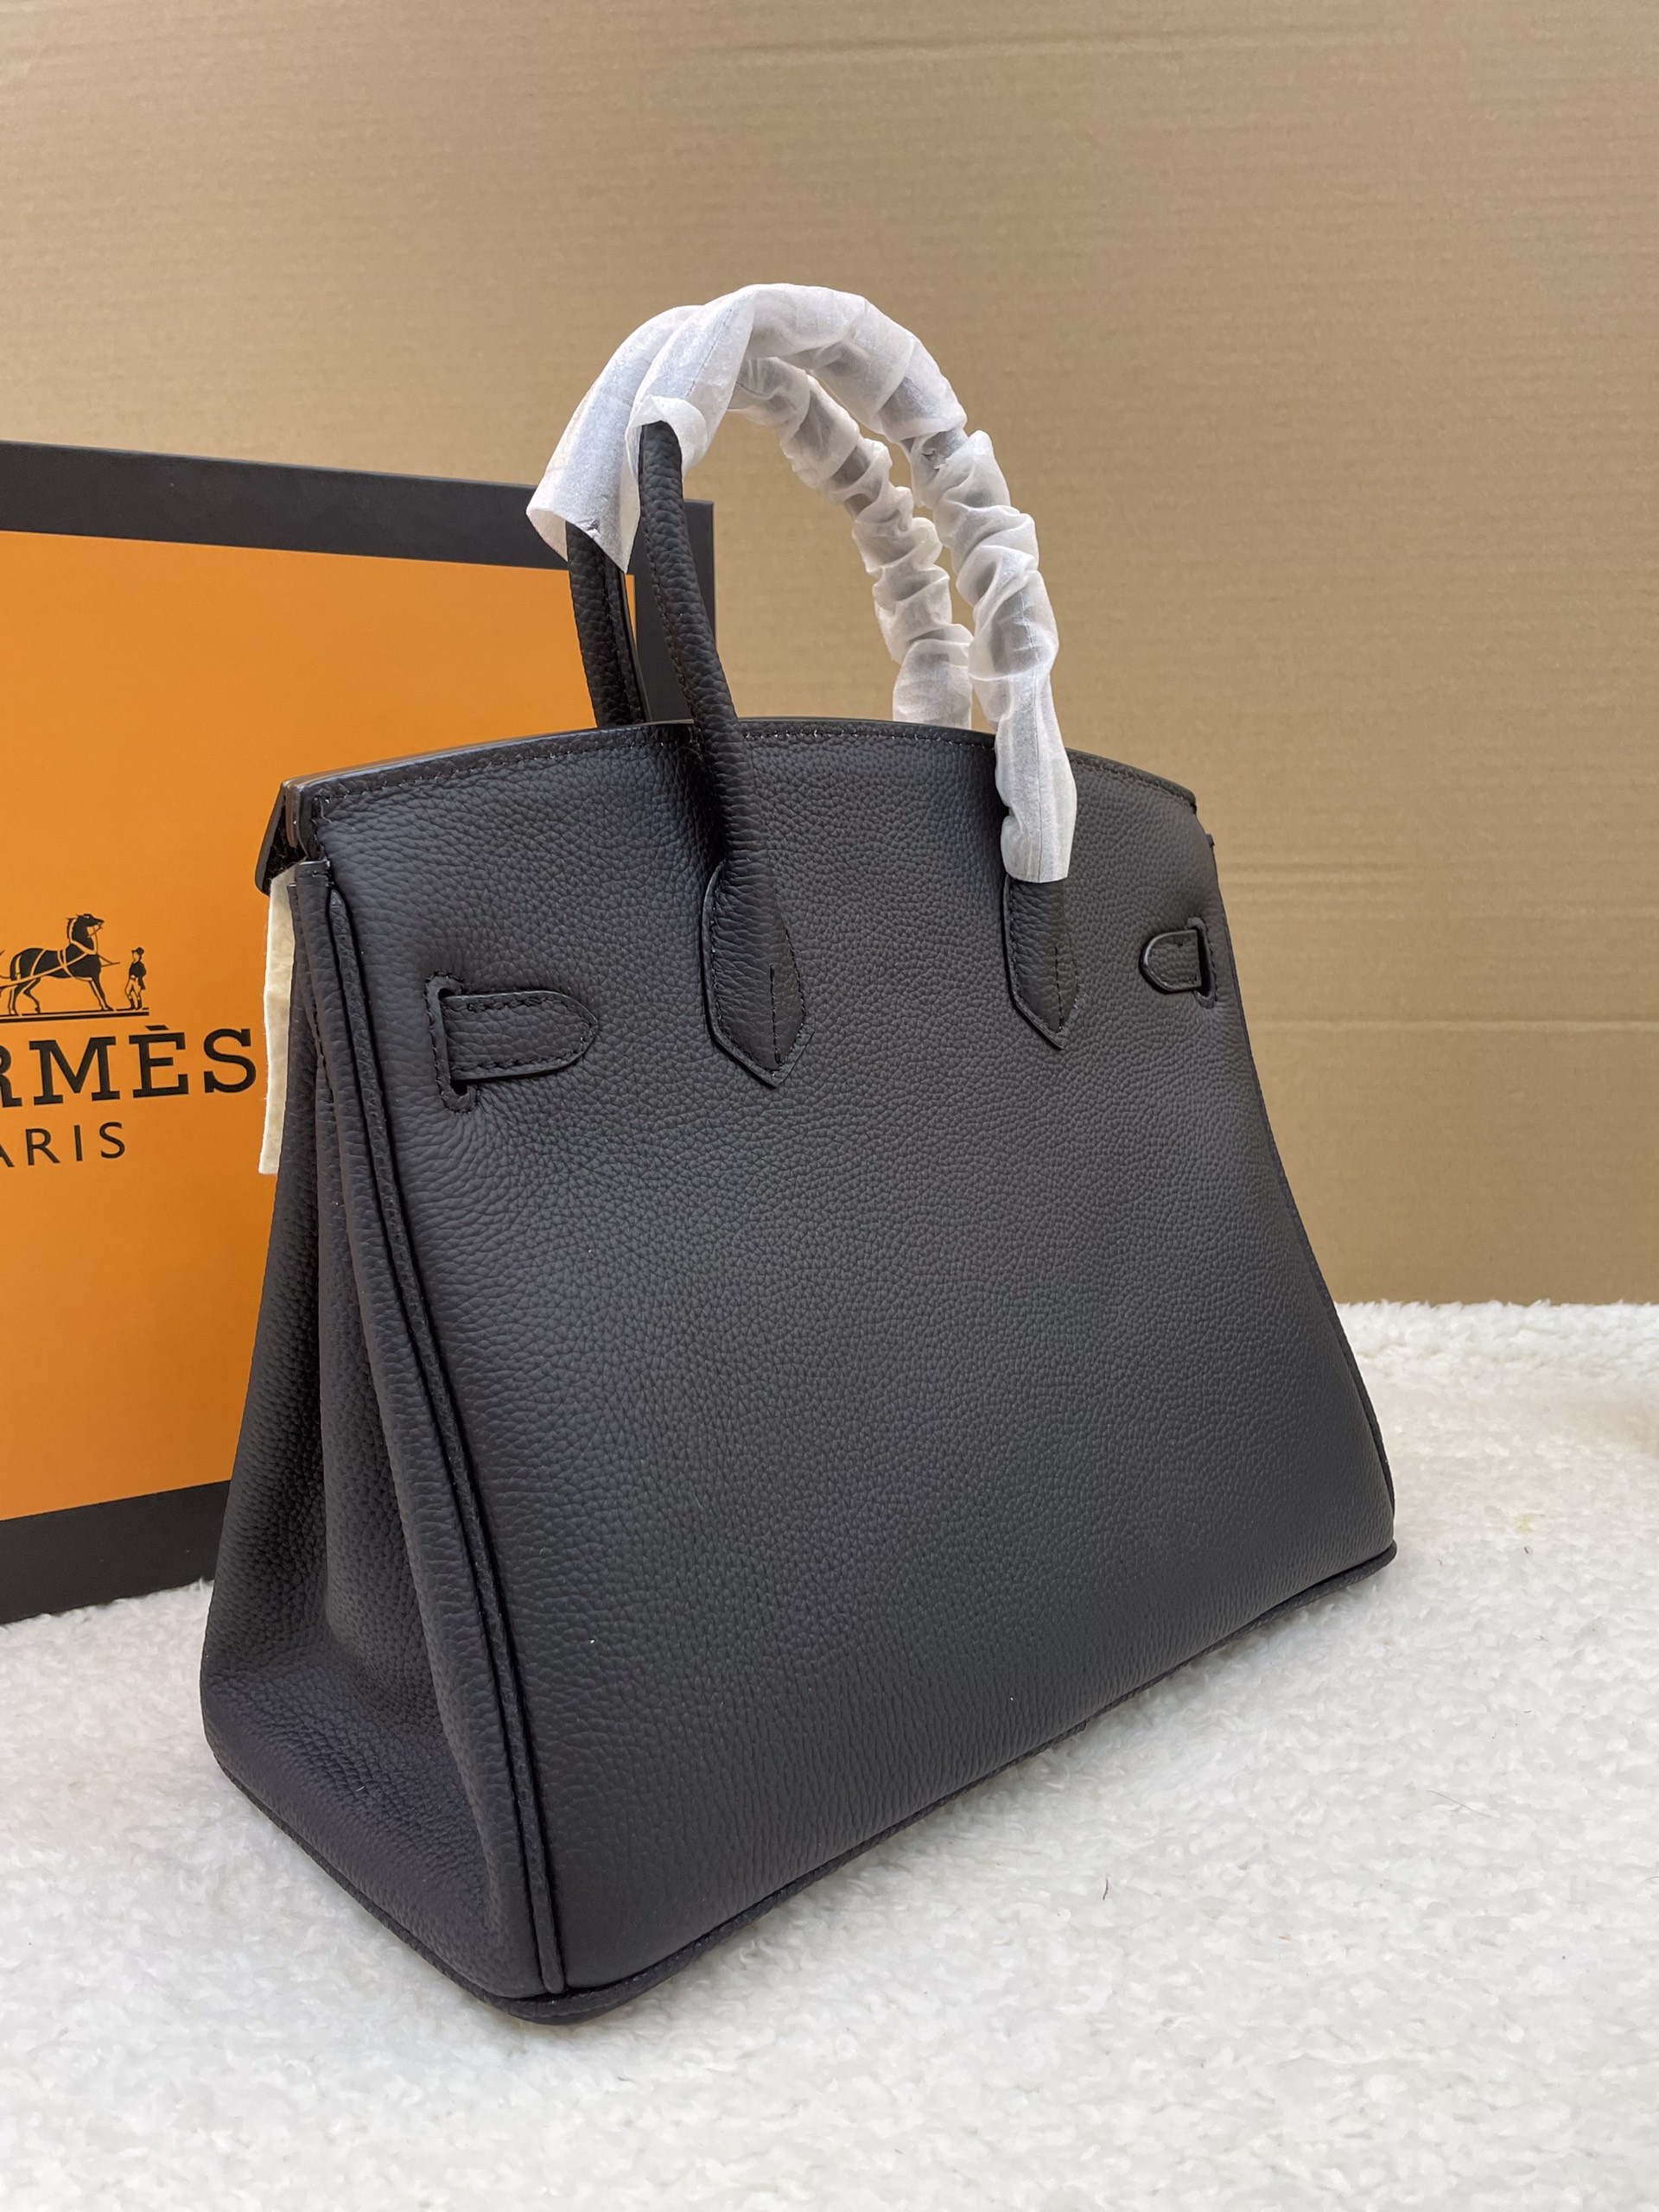 Túi Xách Hermes Birkin Super Màu Đen Size 30cm Full Box